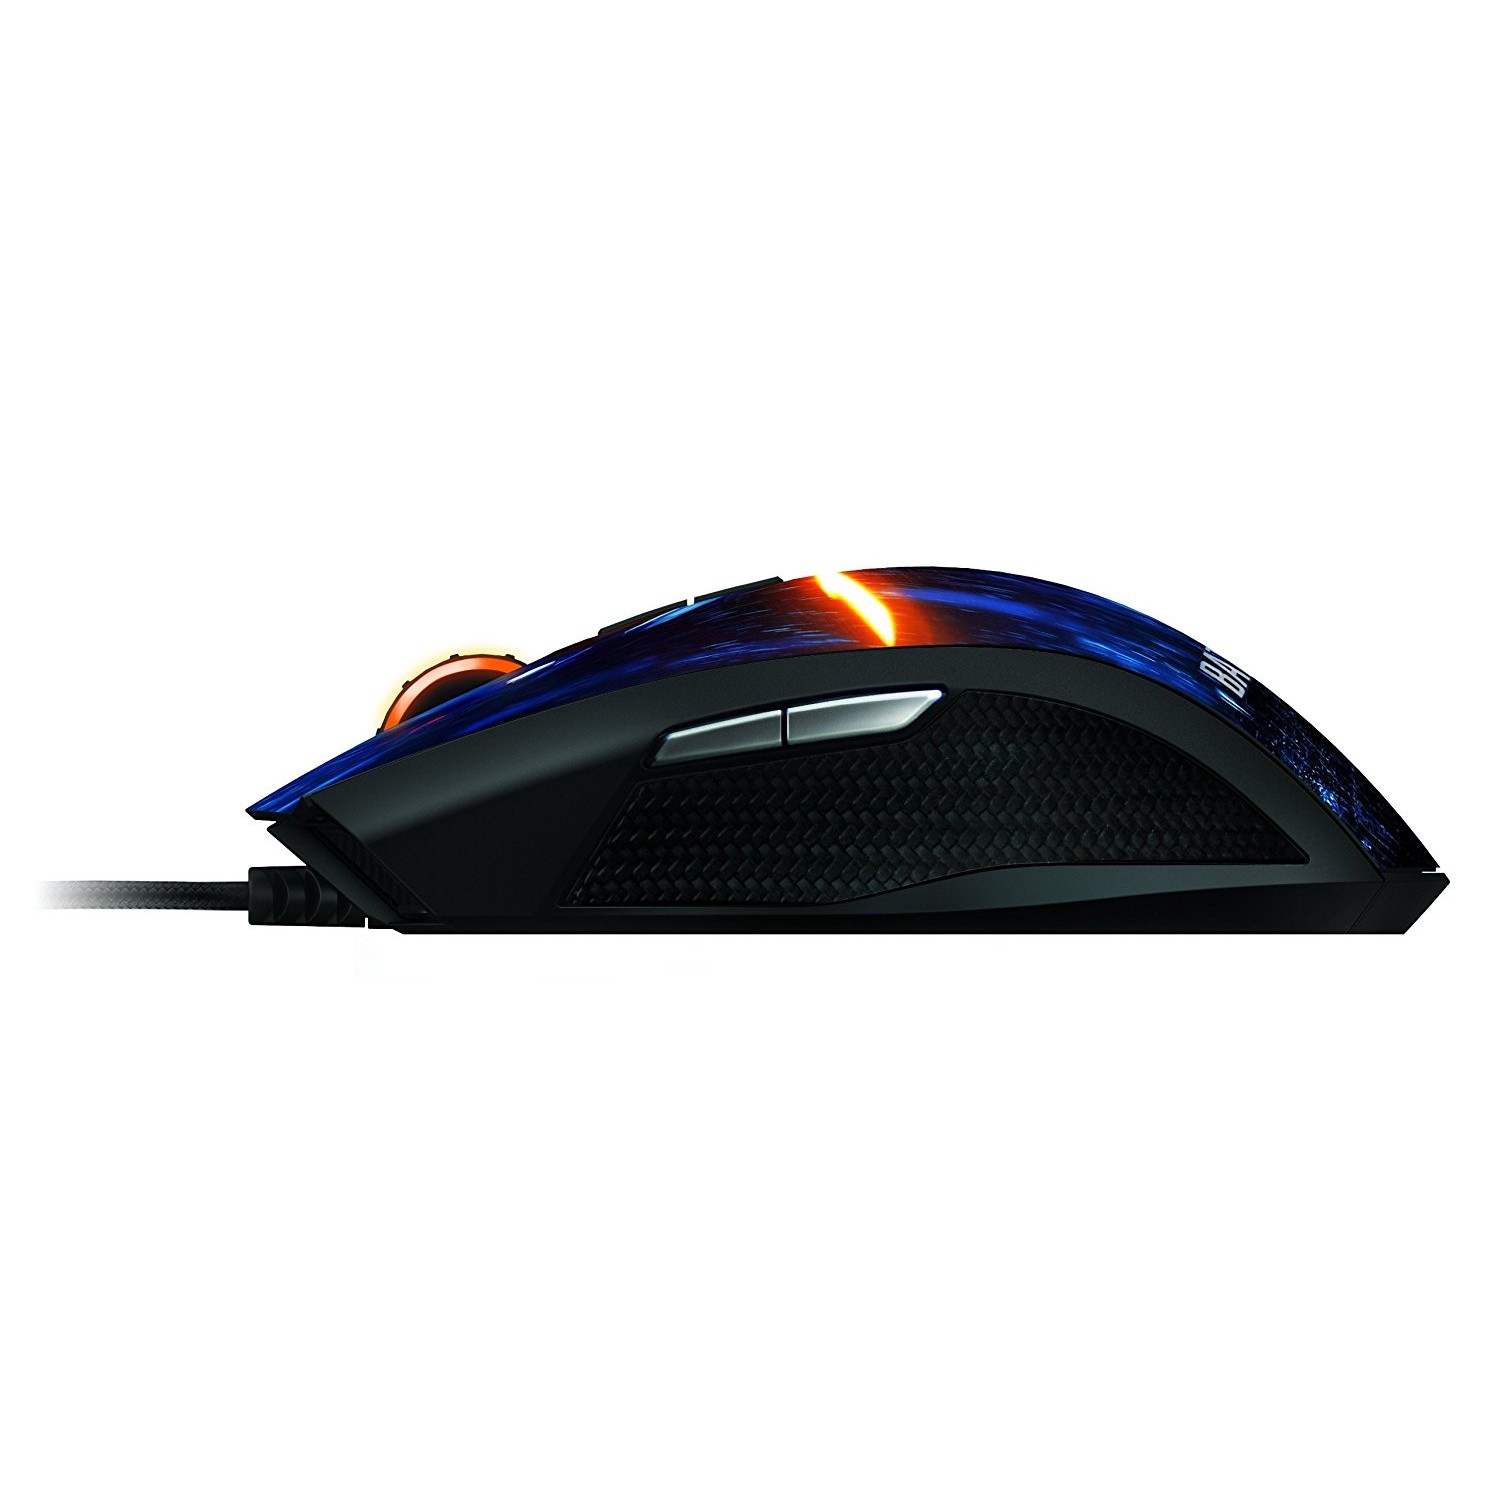  Razer Taipan Battlefield Ambidextrous Gaming Mouse-1